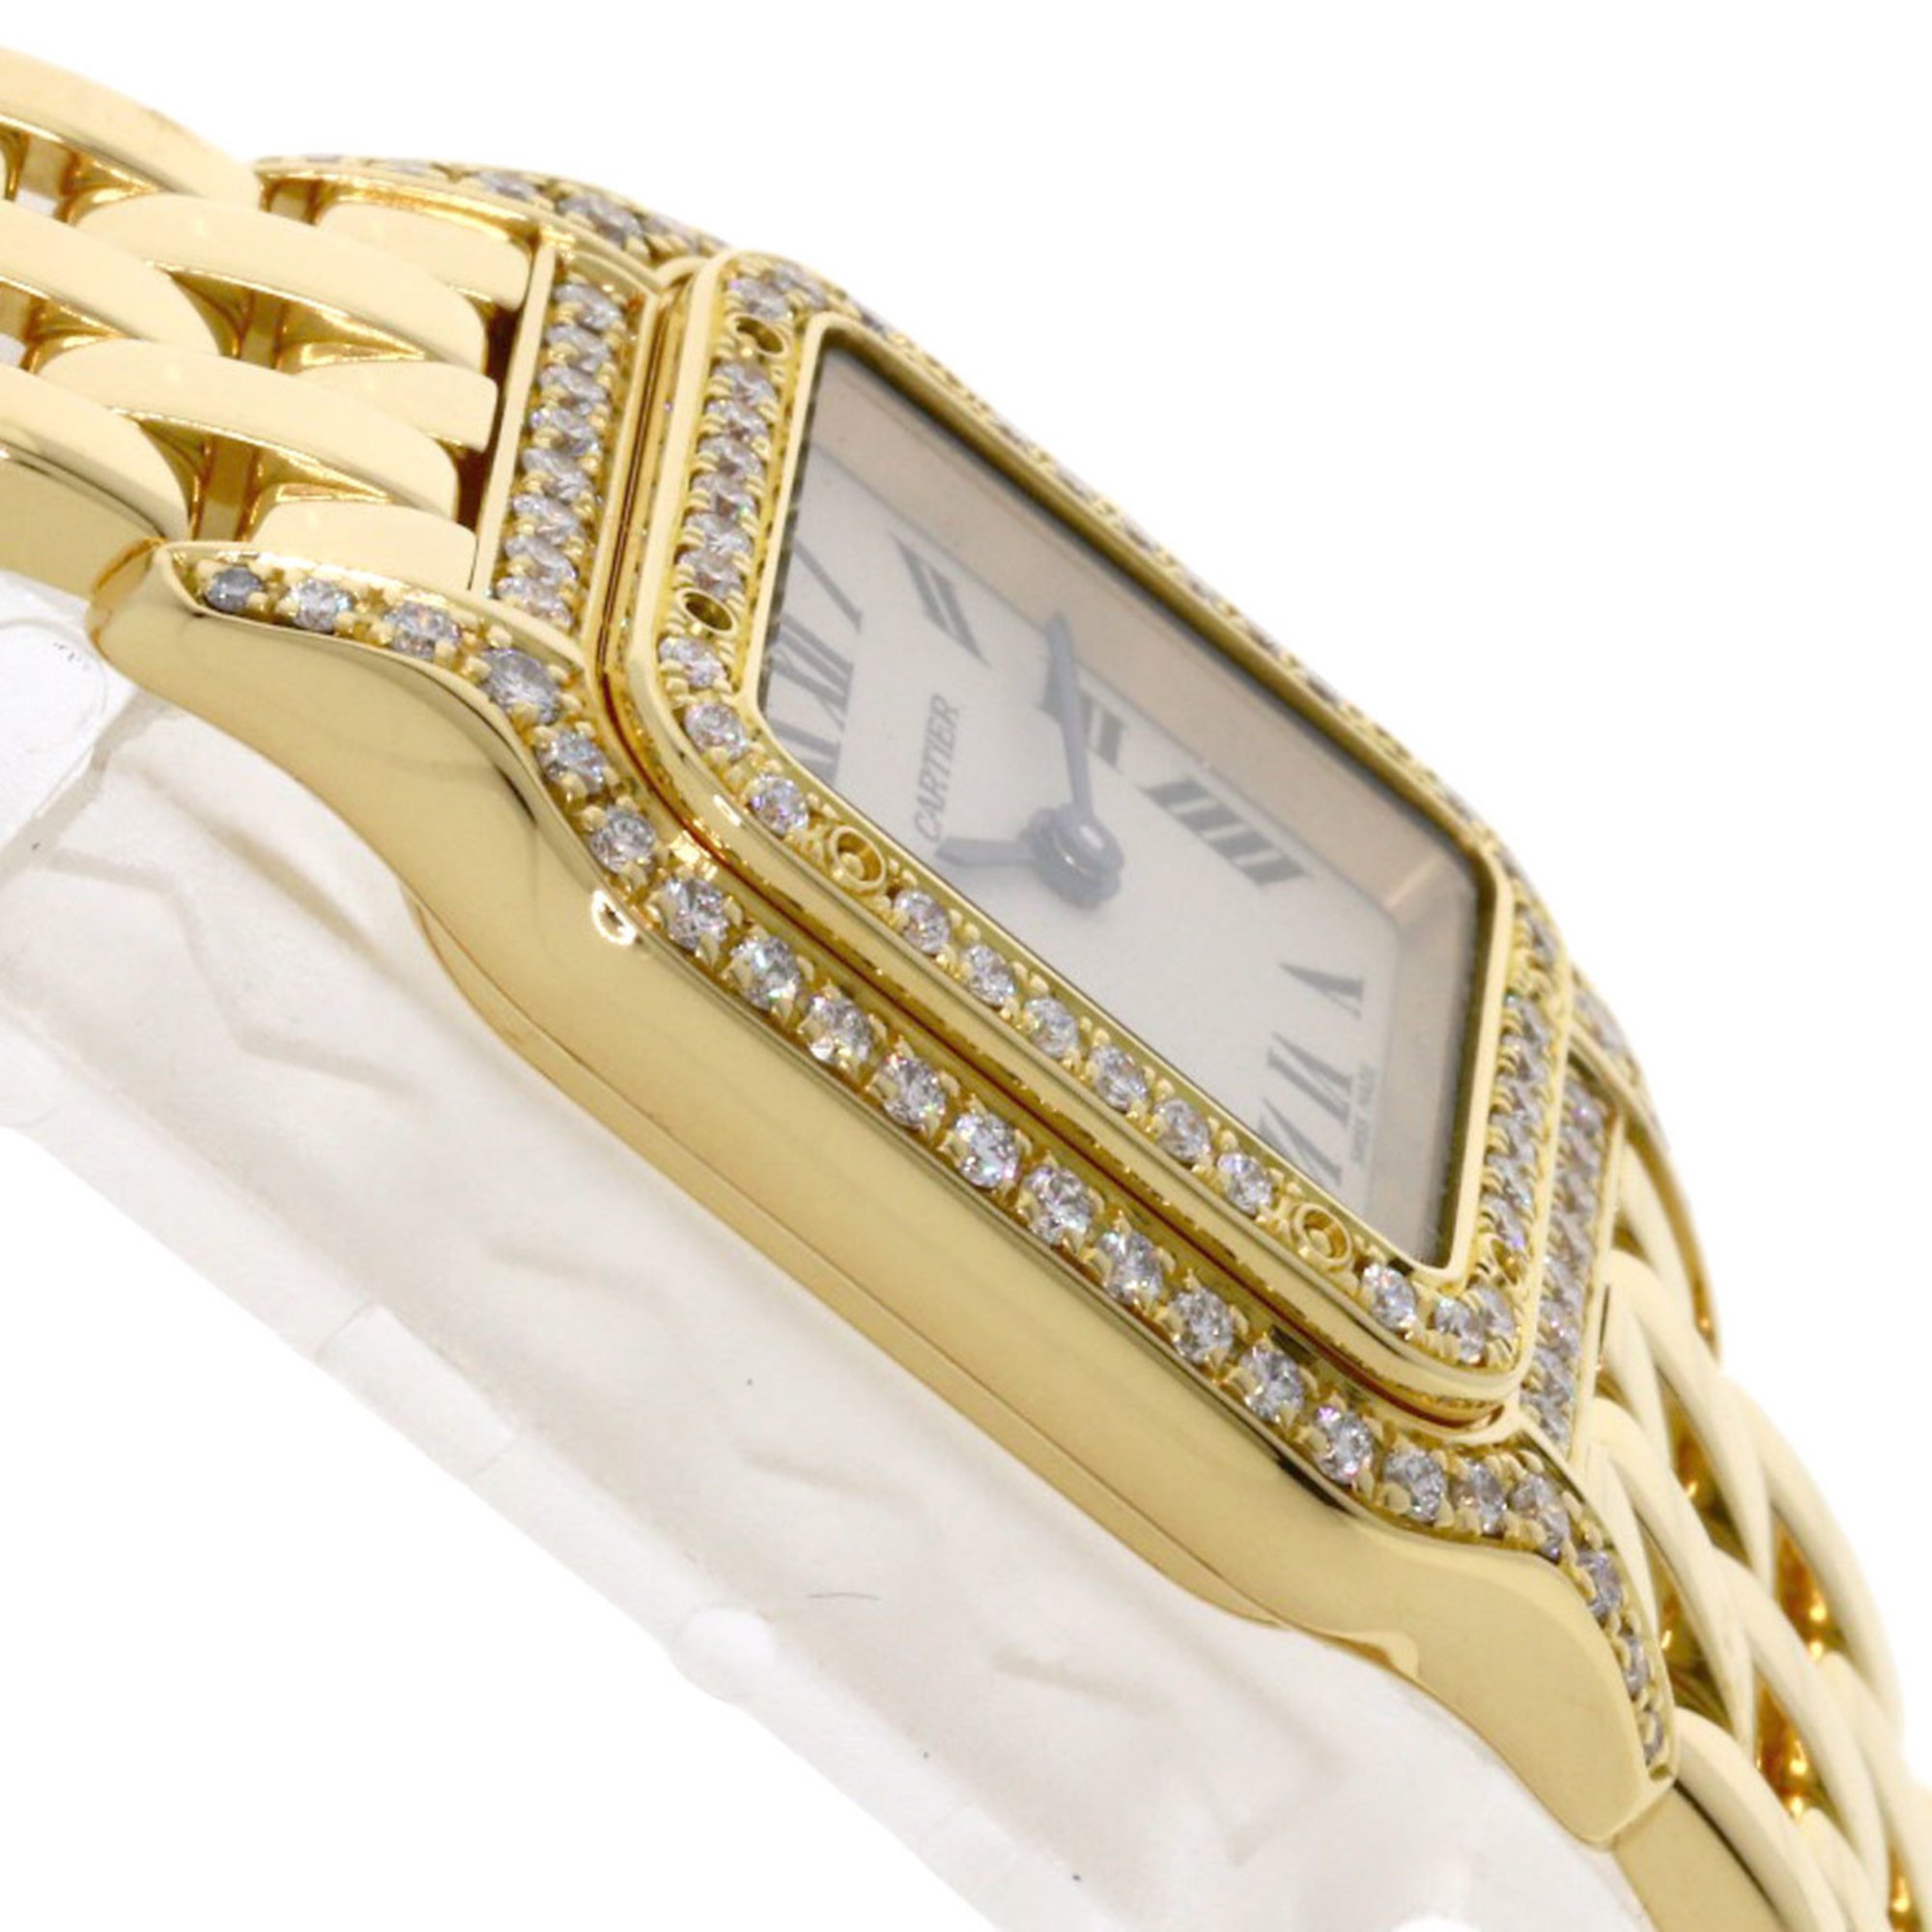 Cartier WF3072B9 Panthere SM Double Diamond Manufacturer Complete Wristwatch K18 Yellow Gold K18YG Ladies